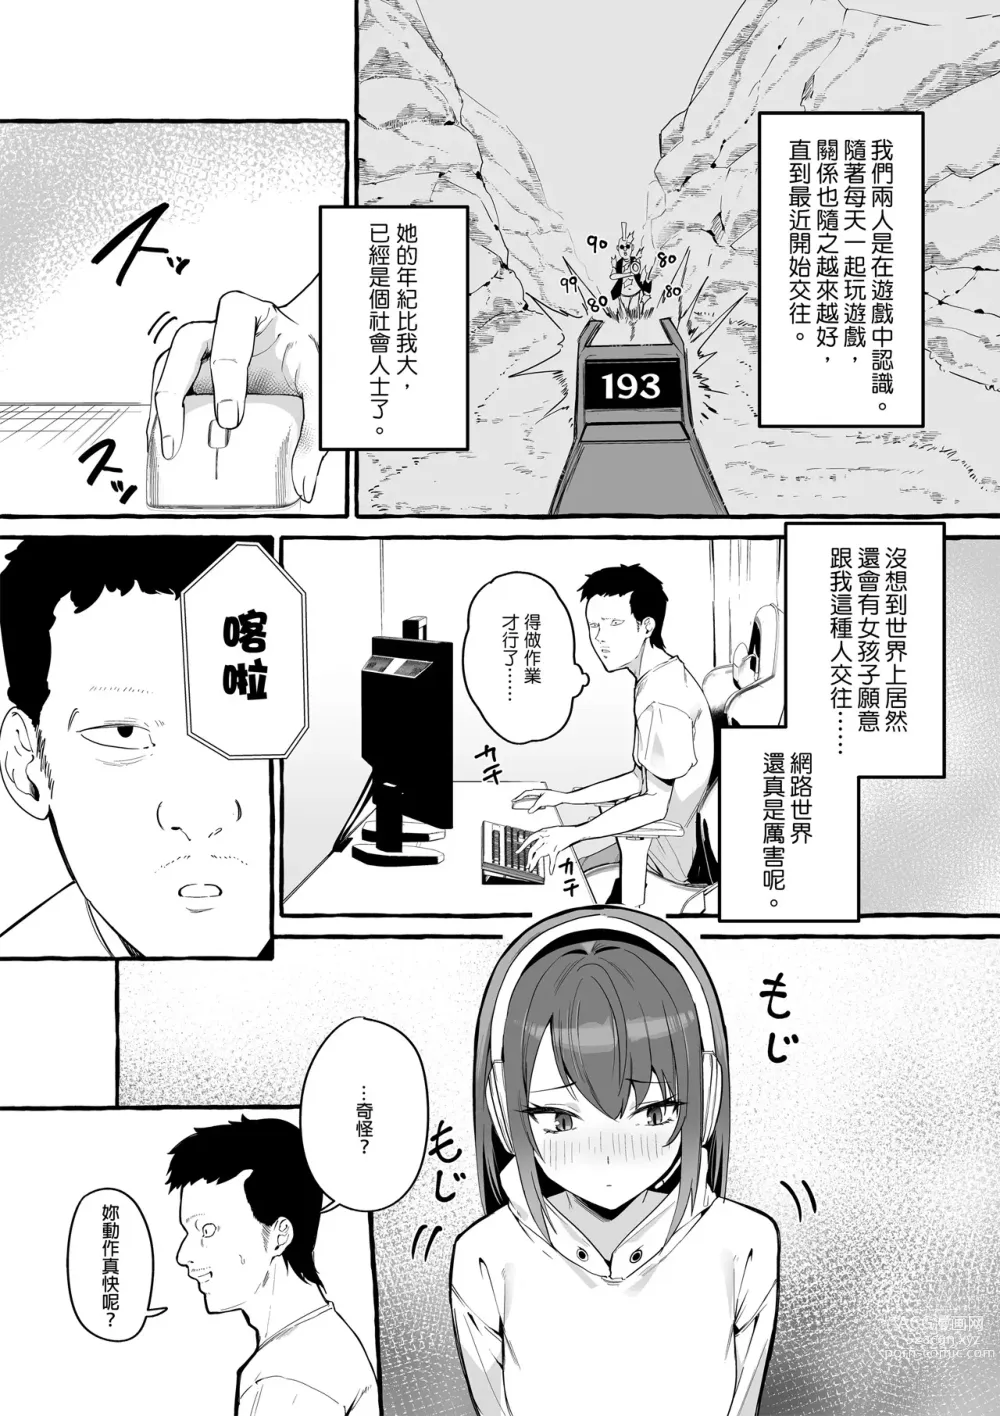 Page 4 of doujinshi ネットで出会った巨乳彼女と会ったら搾り取られまくった話。